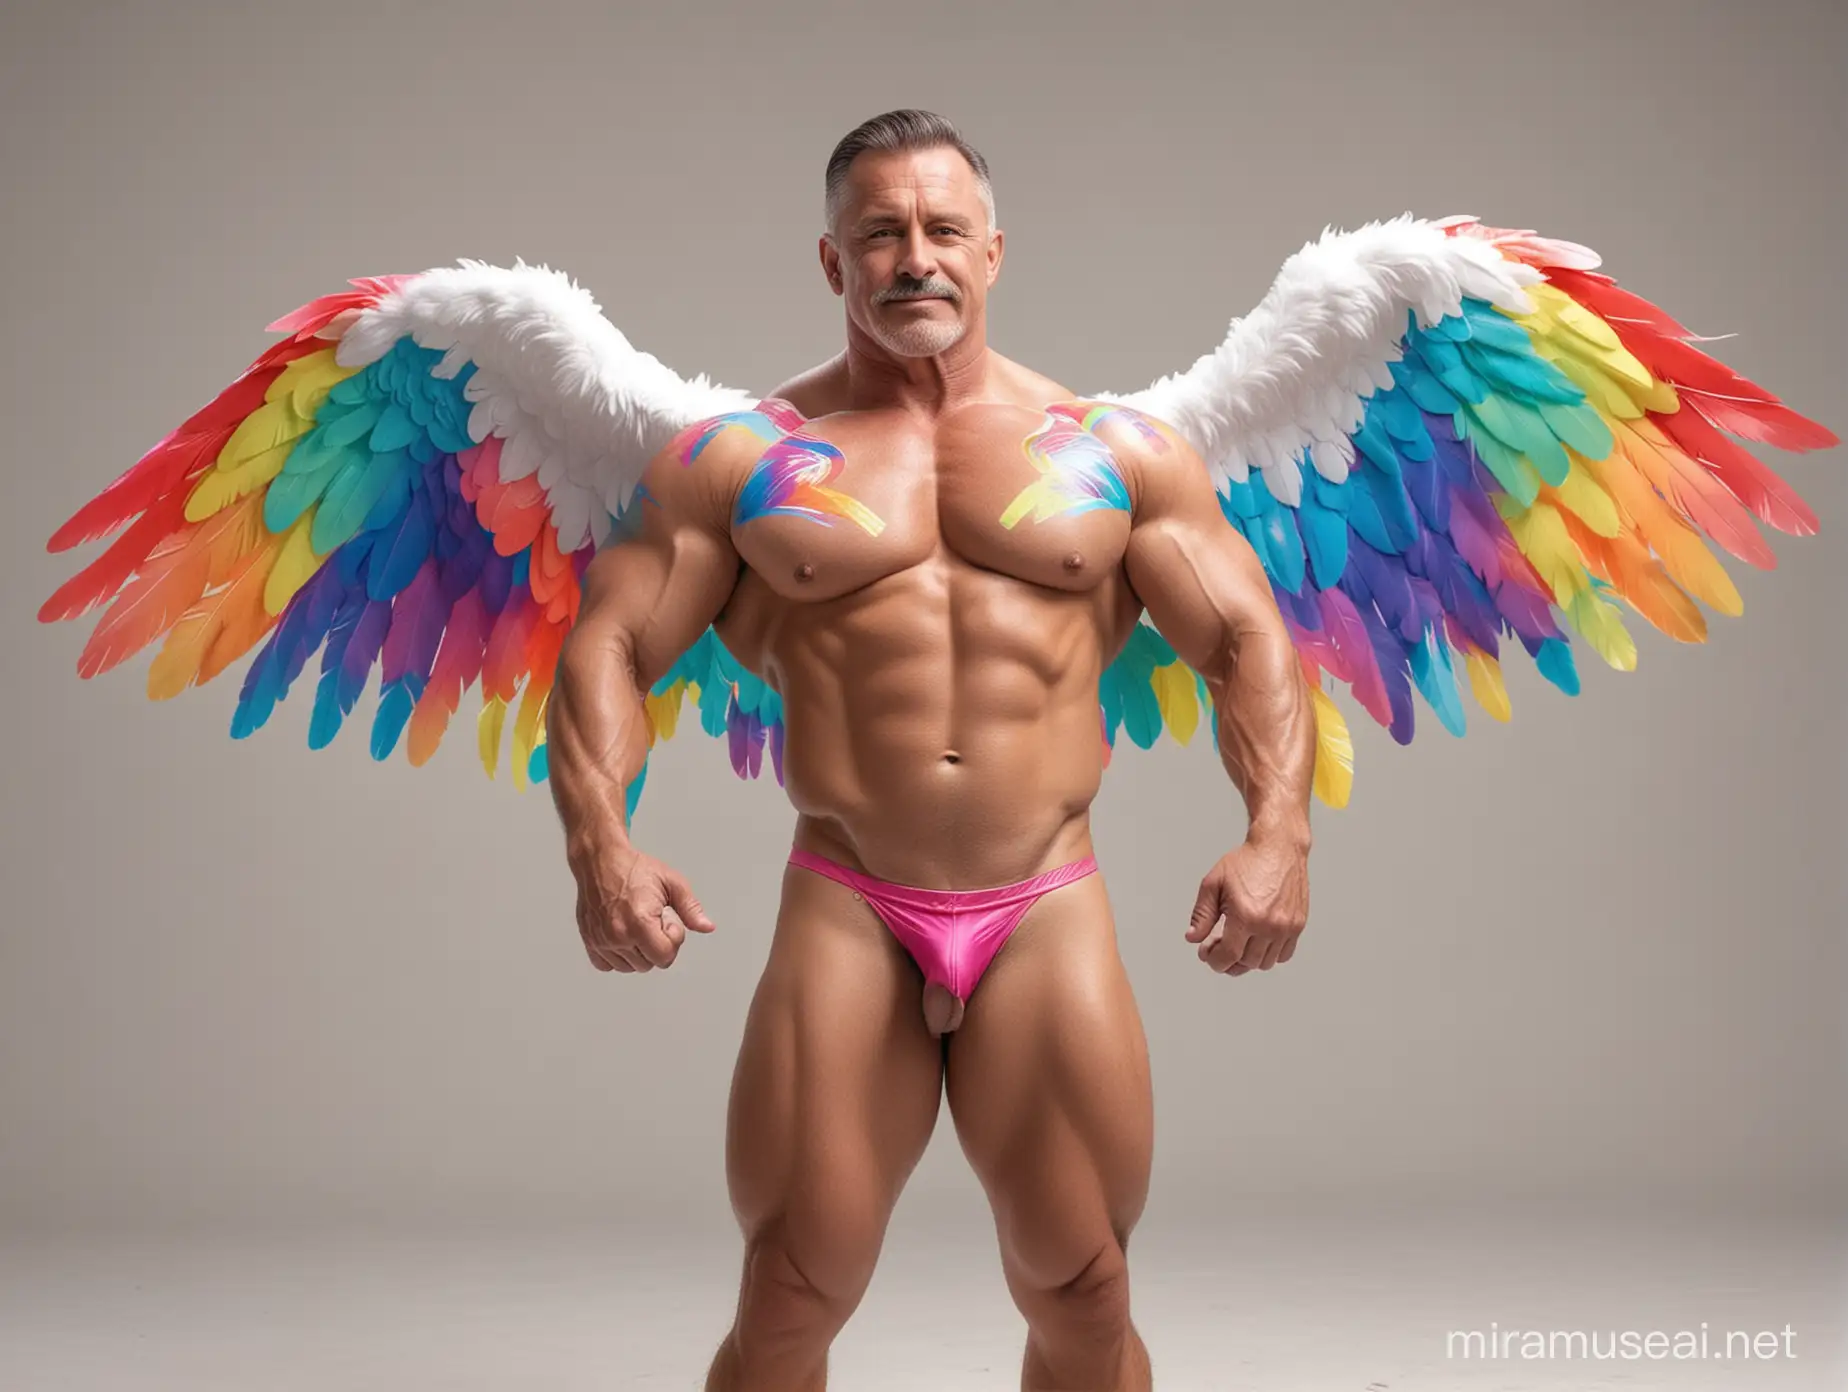 Muscular 40s Bodybuilder Flexing in Vibrant Rainbow Eagle Wings Jacket